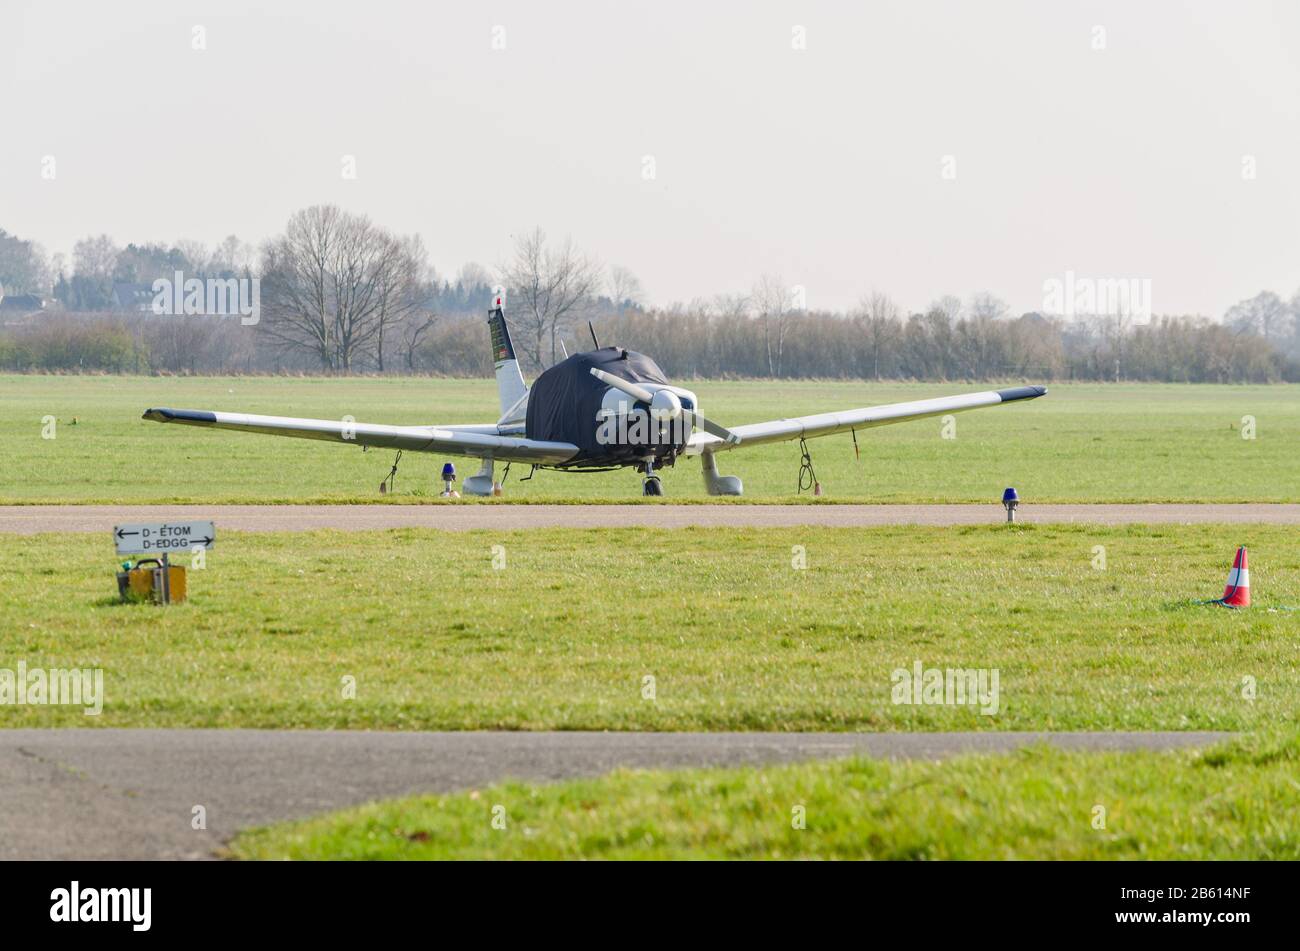 Mühlheim, Nrw, Germany - April 9, 2015: Small sports plane during startup at the airport Essen-Mülheim. Stock Photo